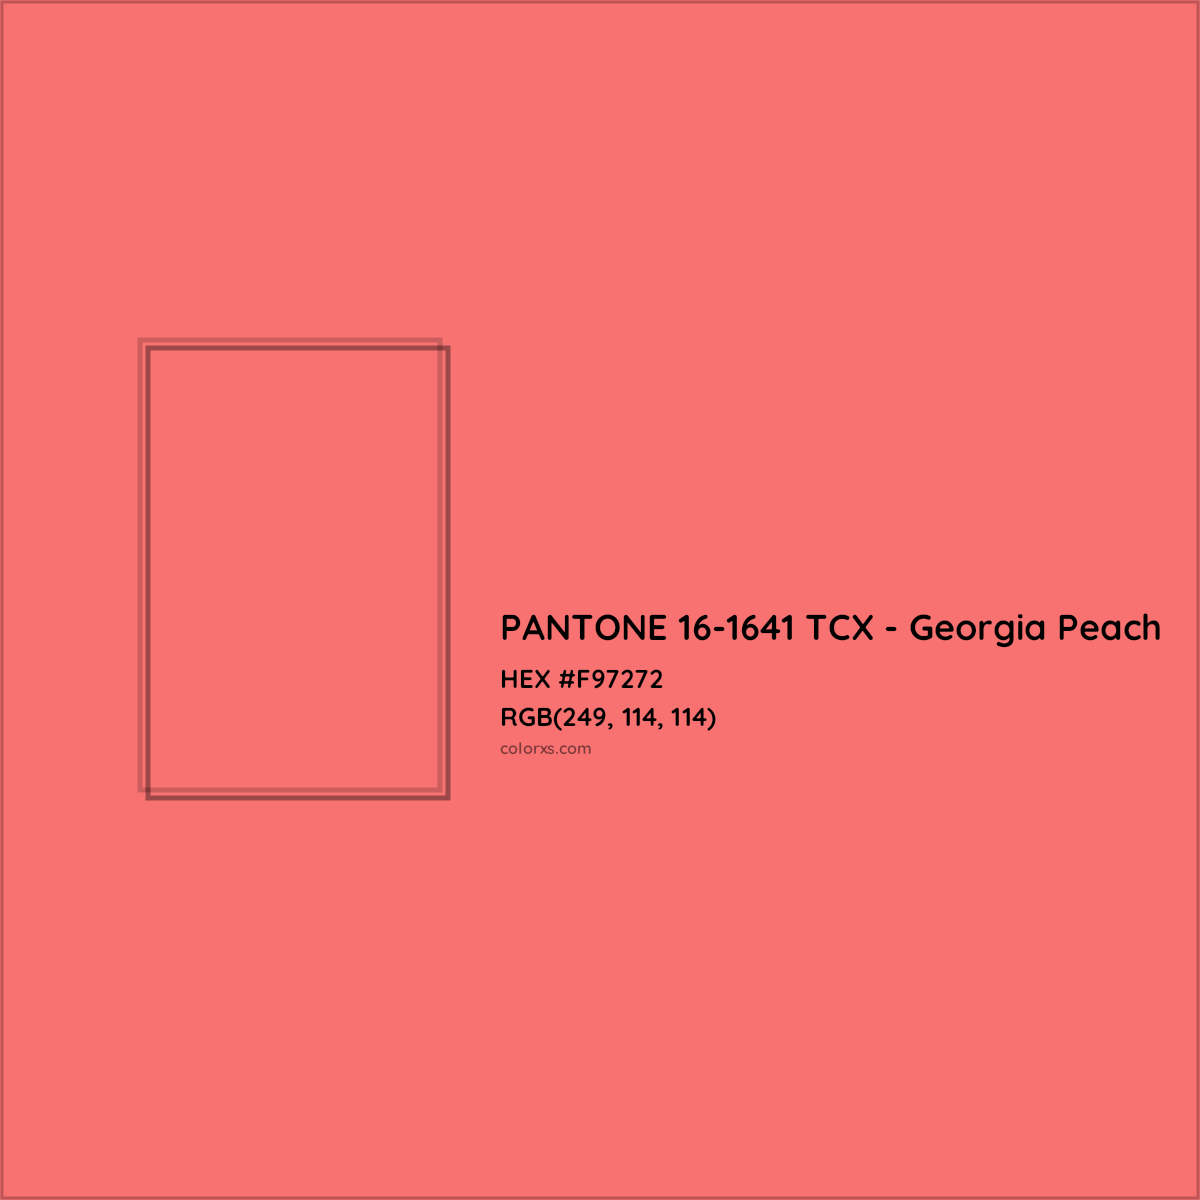 HEX #F97272 PANTONE 16-1641 TCX - Georgia Peach CMS Pantone TCX - Color Code